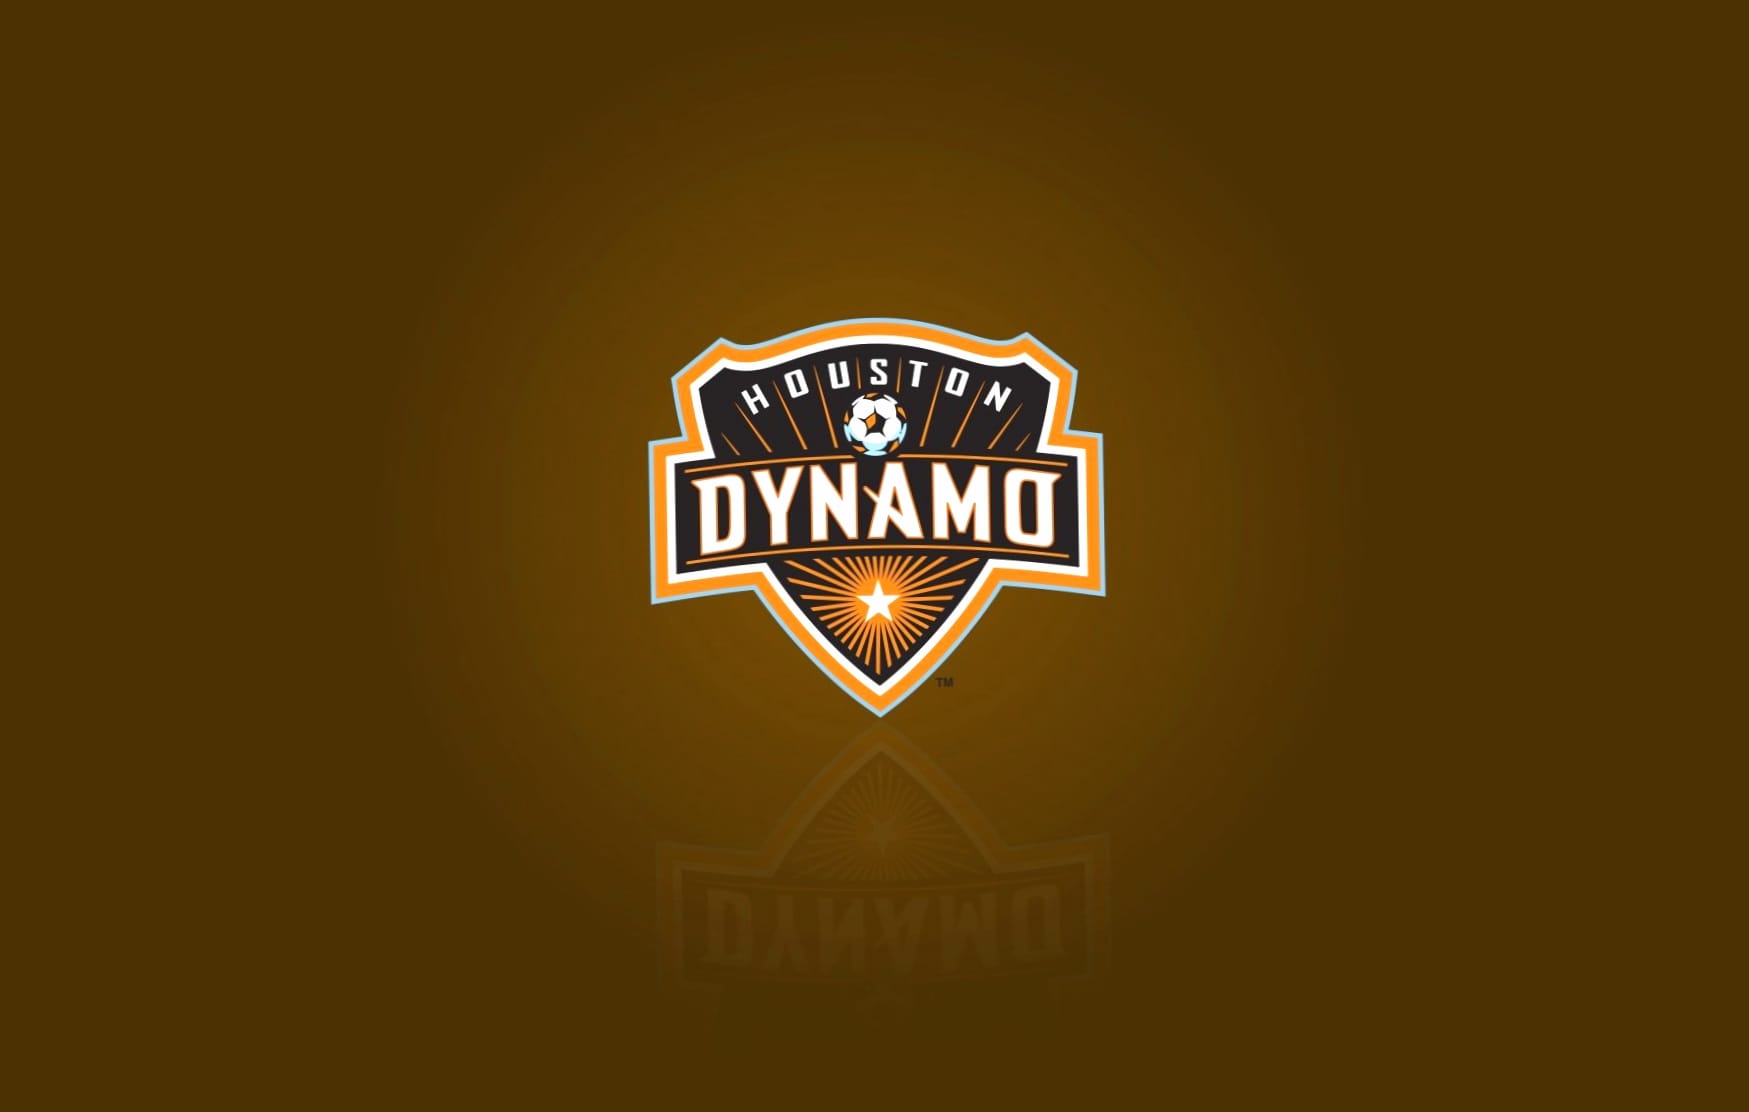 Houston Dynamo FC at 2048 x 2048 iPad size wallpapers HD quality